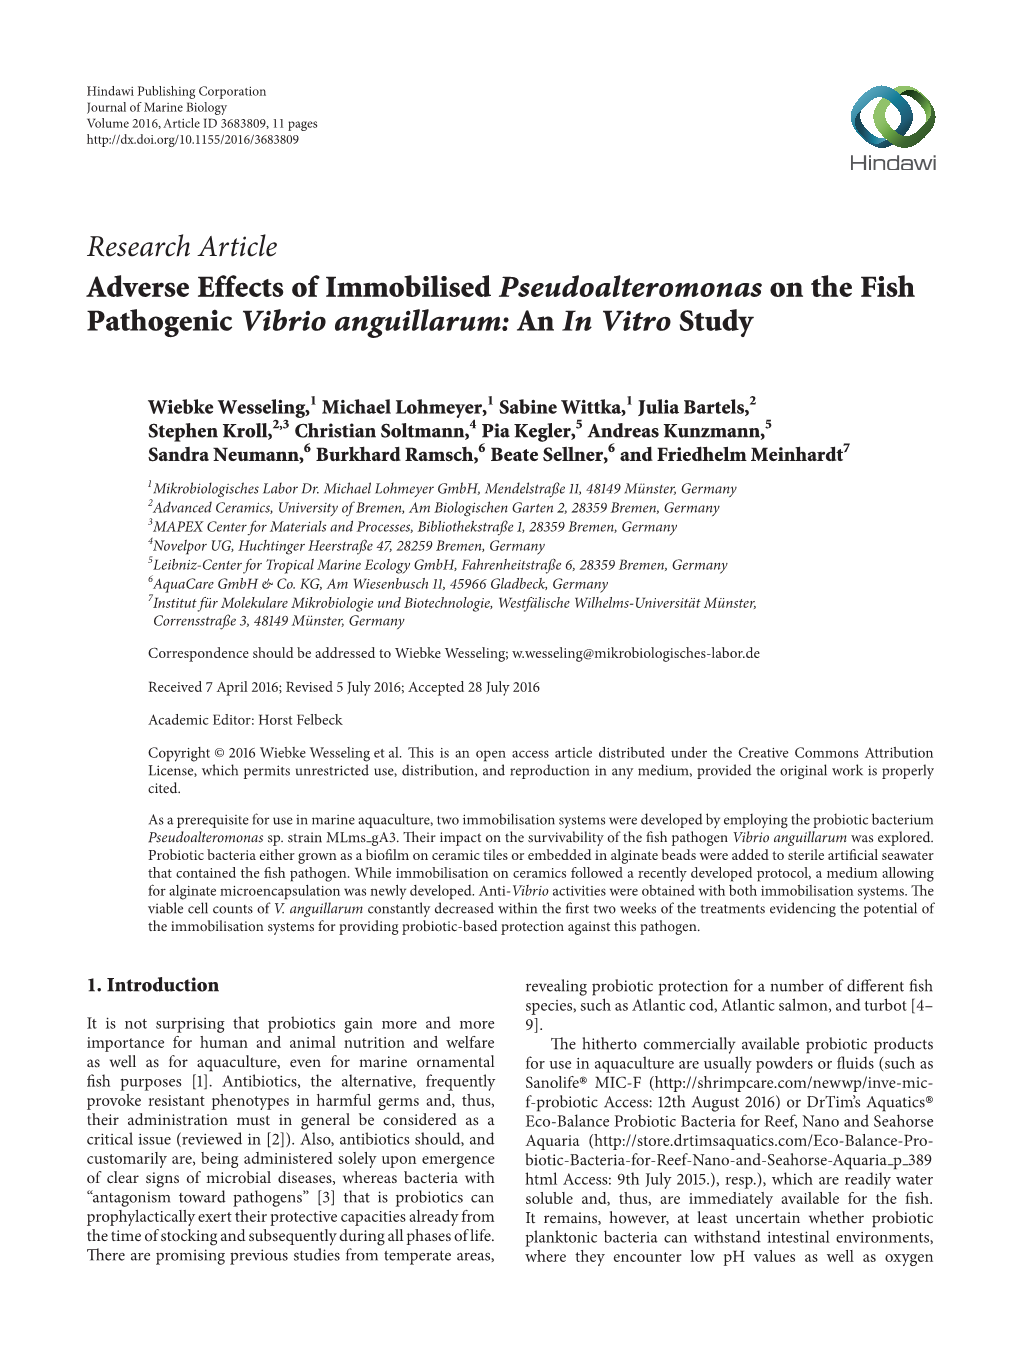 Adverse Effects of Immobilised Pseudoalteromonas on the Fish Pathogenic Vibrio Anguillarum: an in Vitro Study